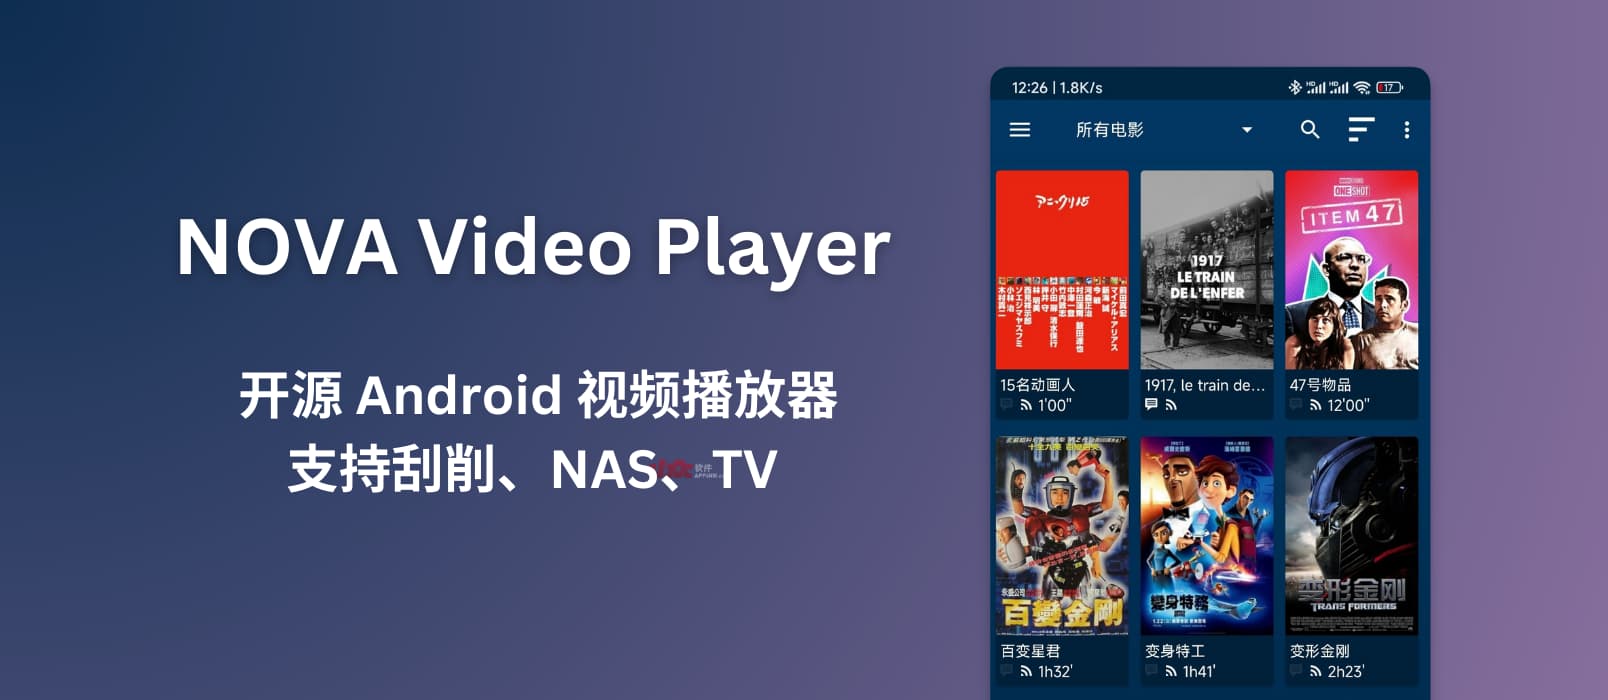 NOVA Video Player - 开源 Android 视频播放器，支持手机、平板、电视，支持刮削、NAS 等